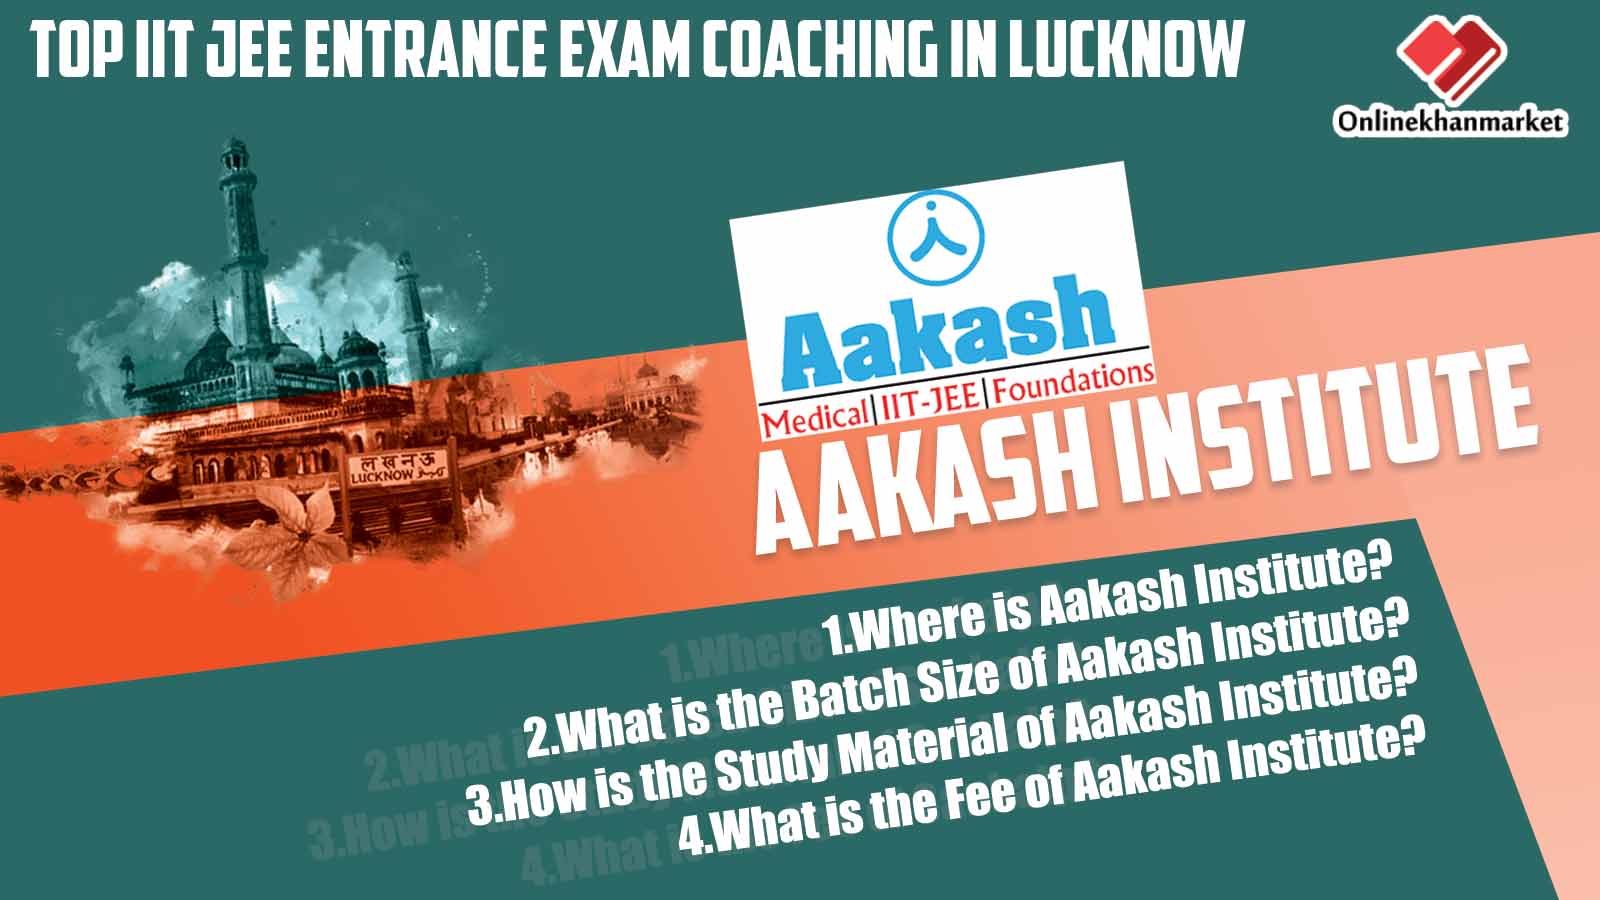 Best IIT JEE Coaching in Lucknow